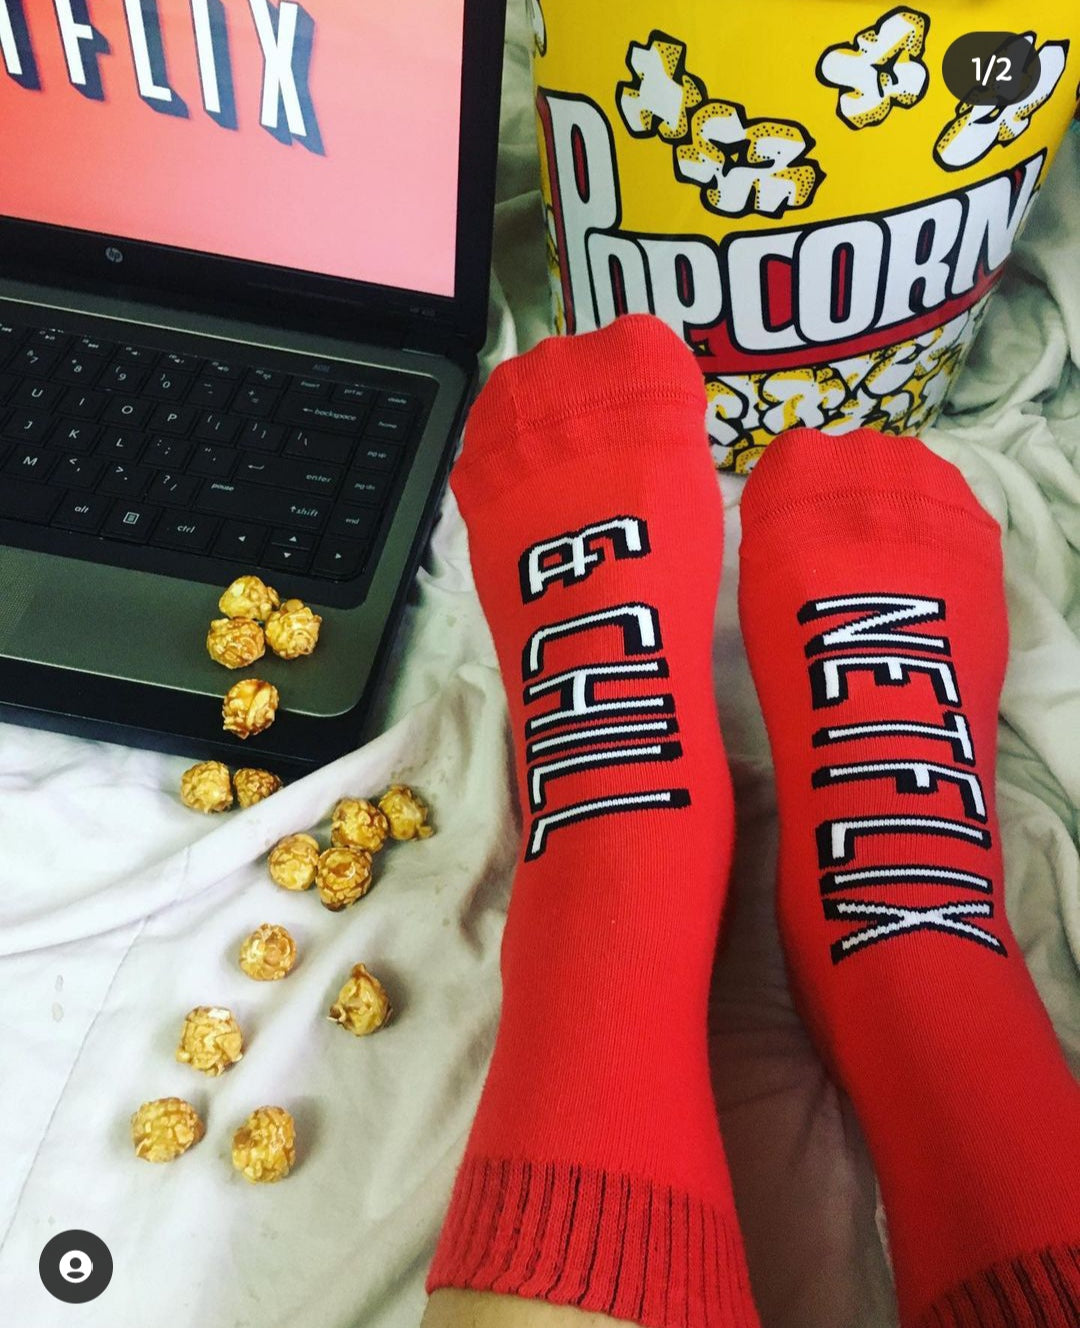 Netflix And Chill Socks